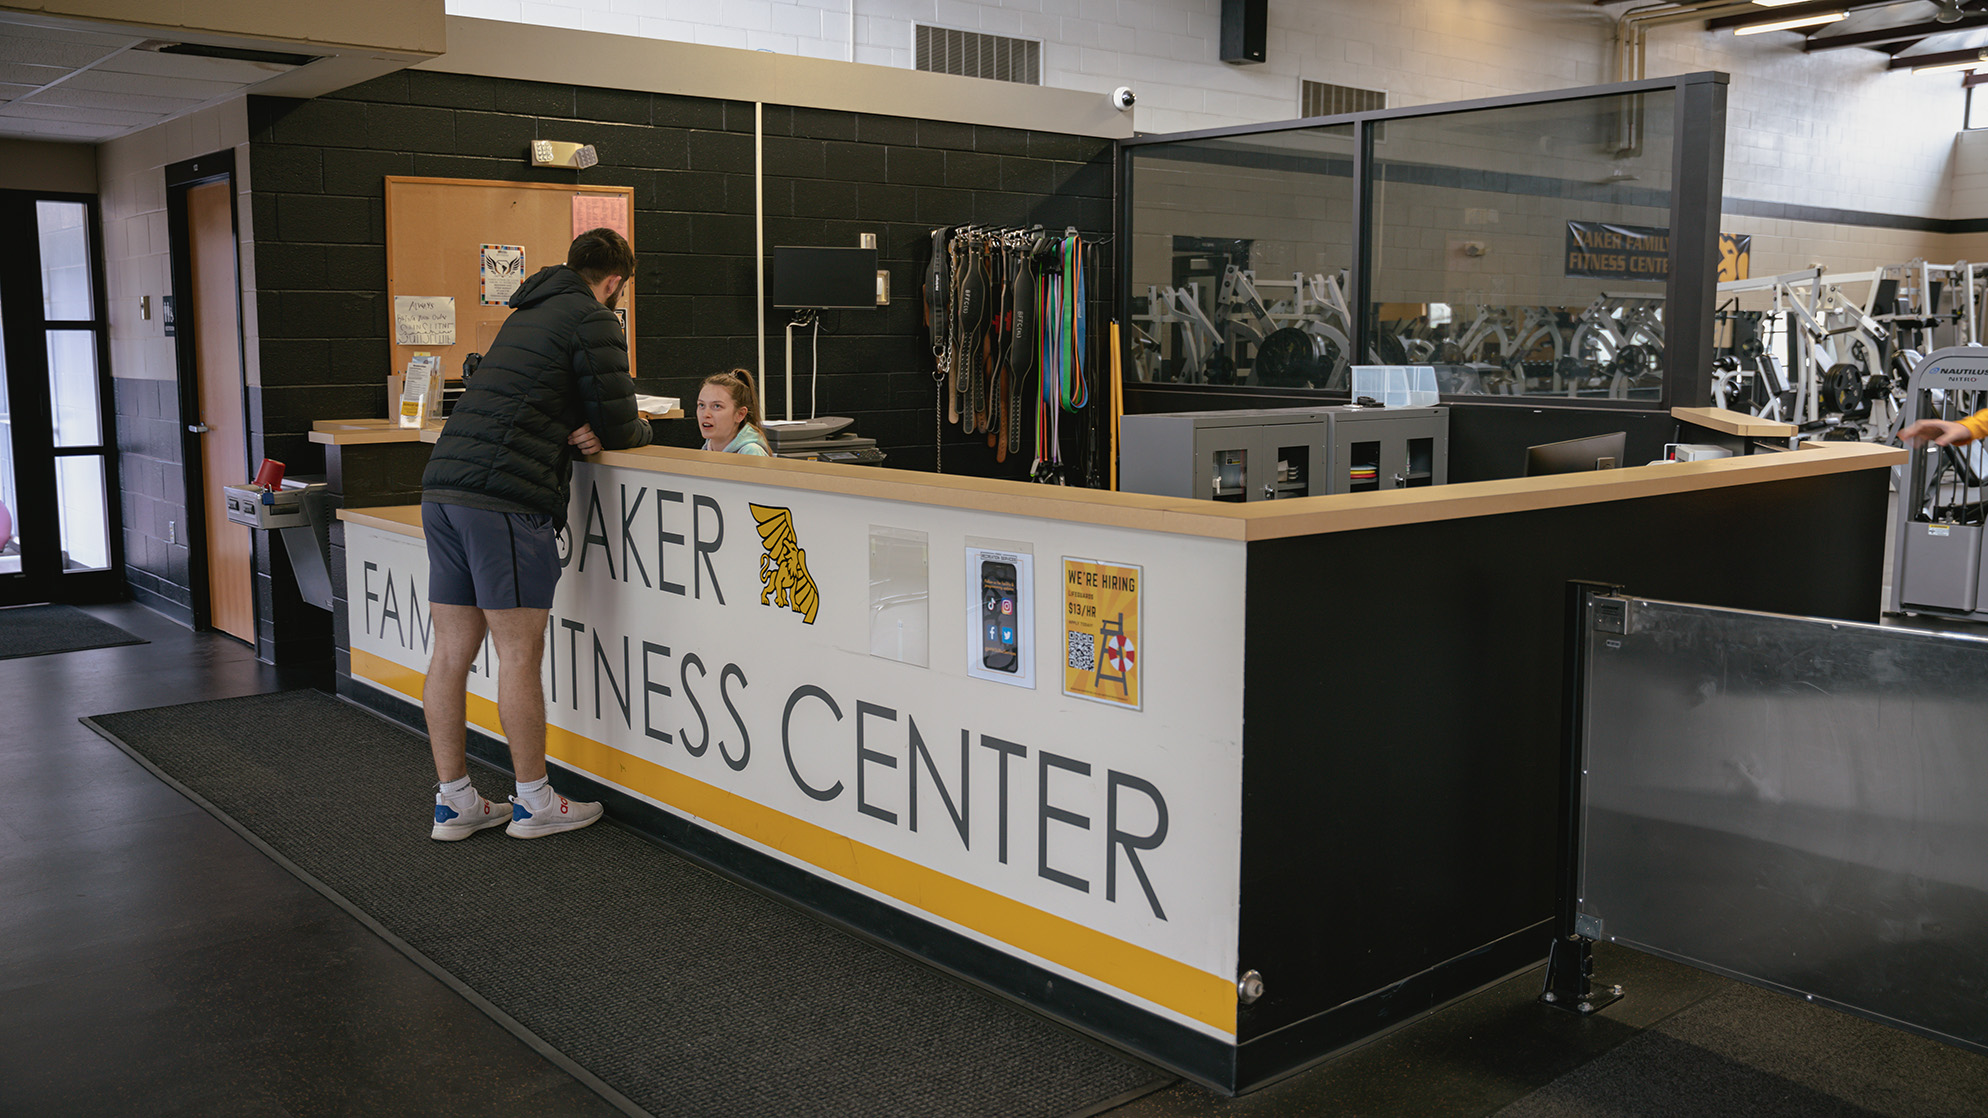 Student at front desk of Baker fitness center